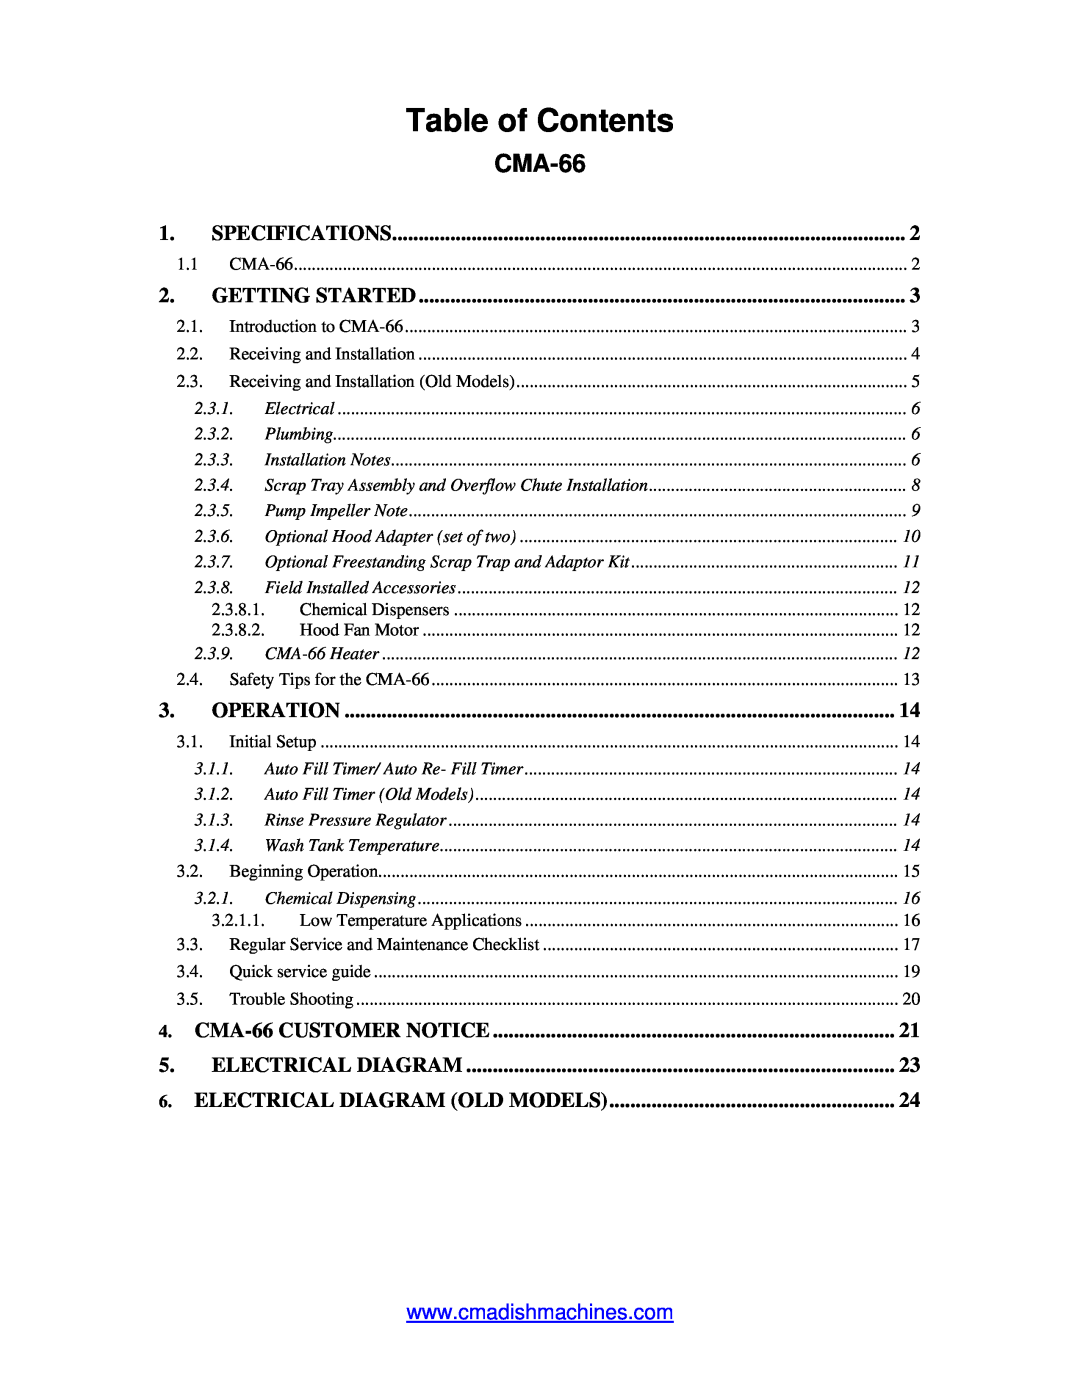 CMA Dishmachines CMA-66 manual Table of Contents 